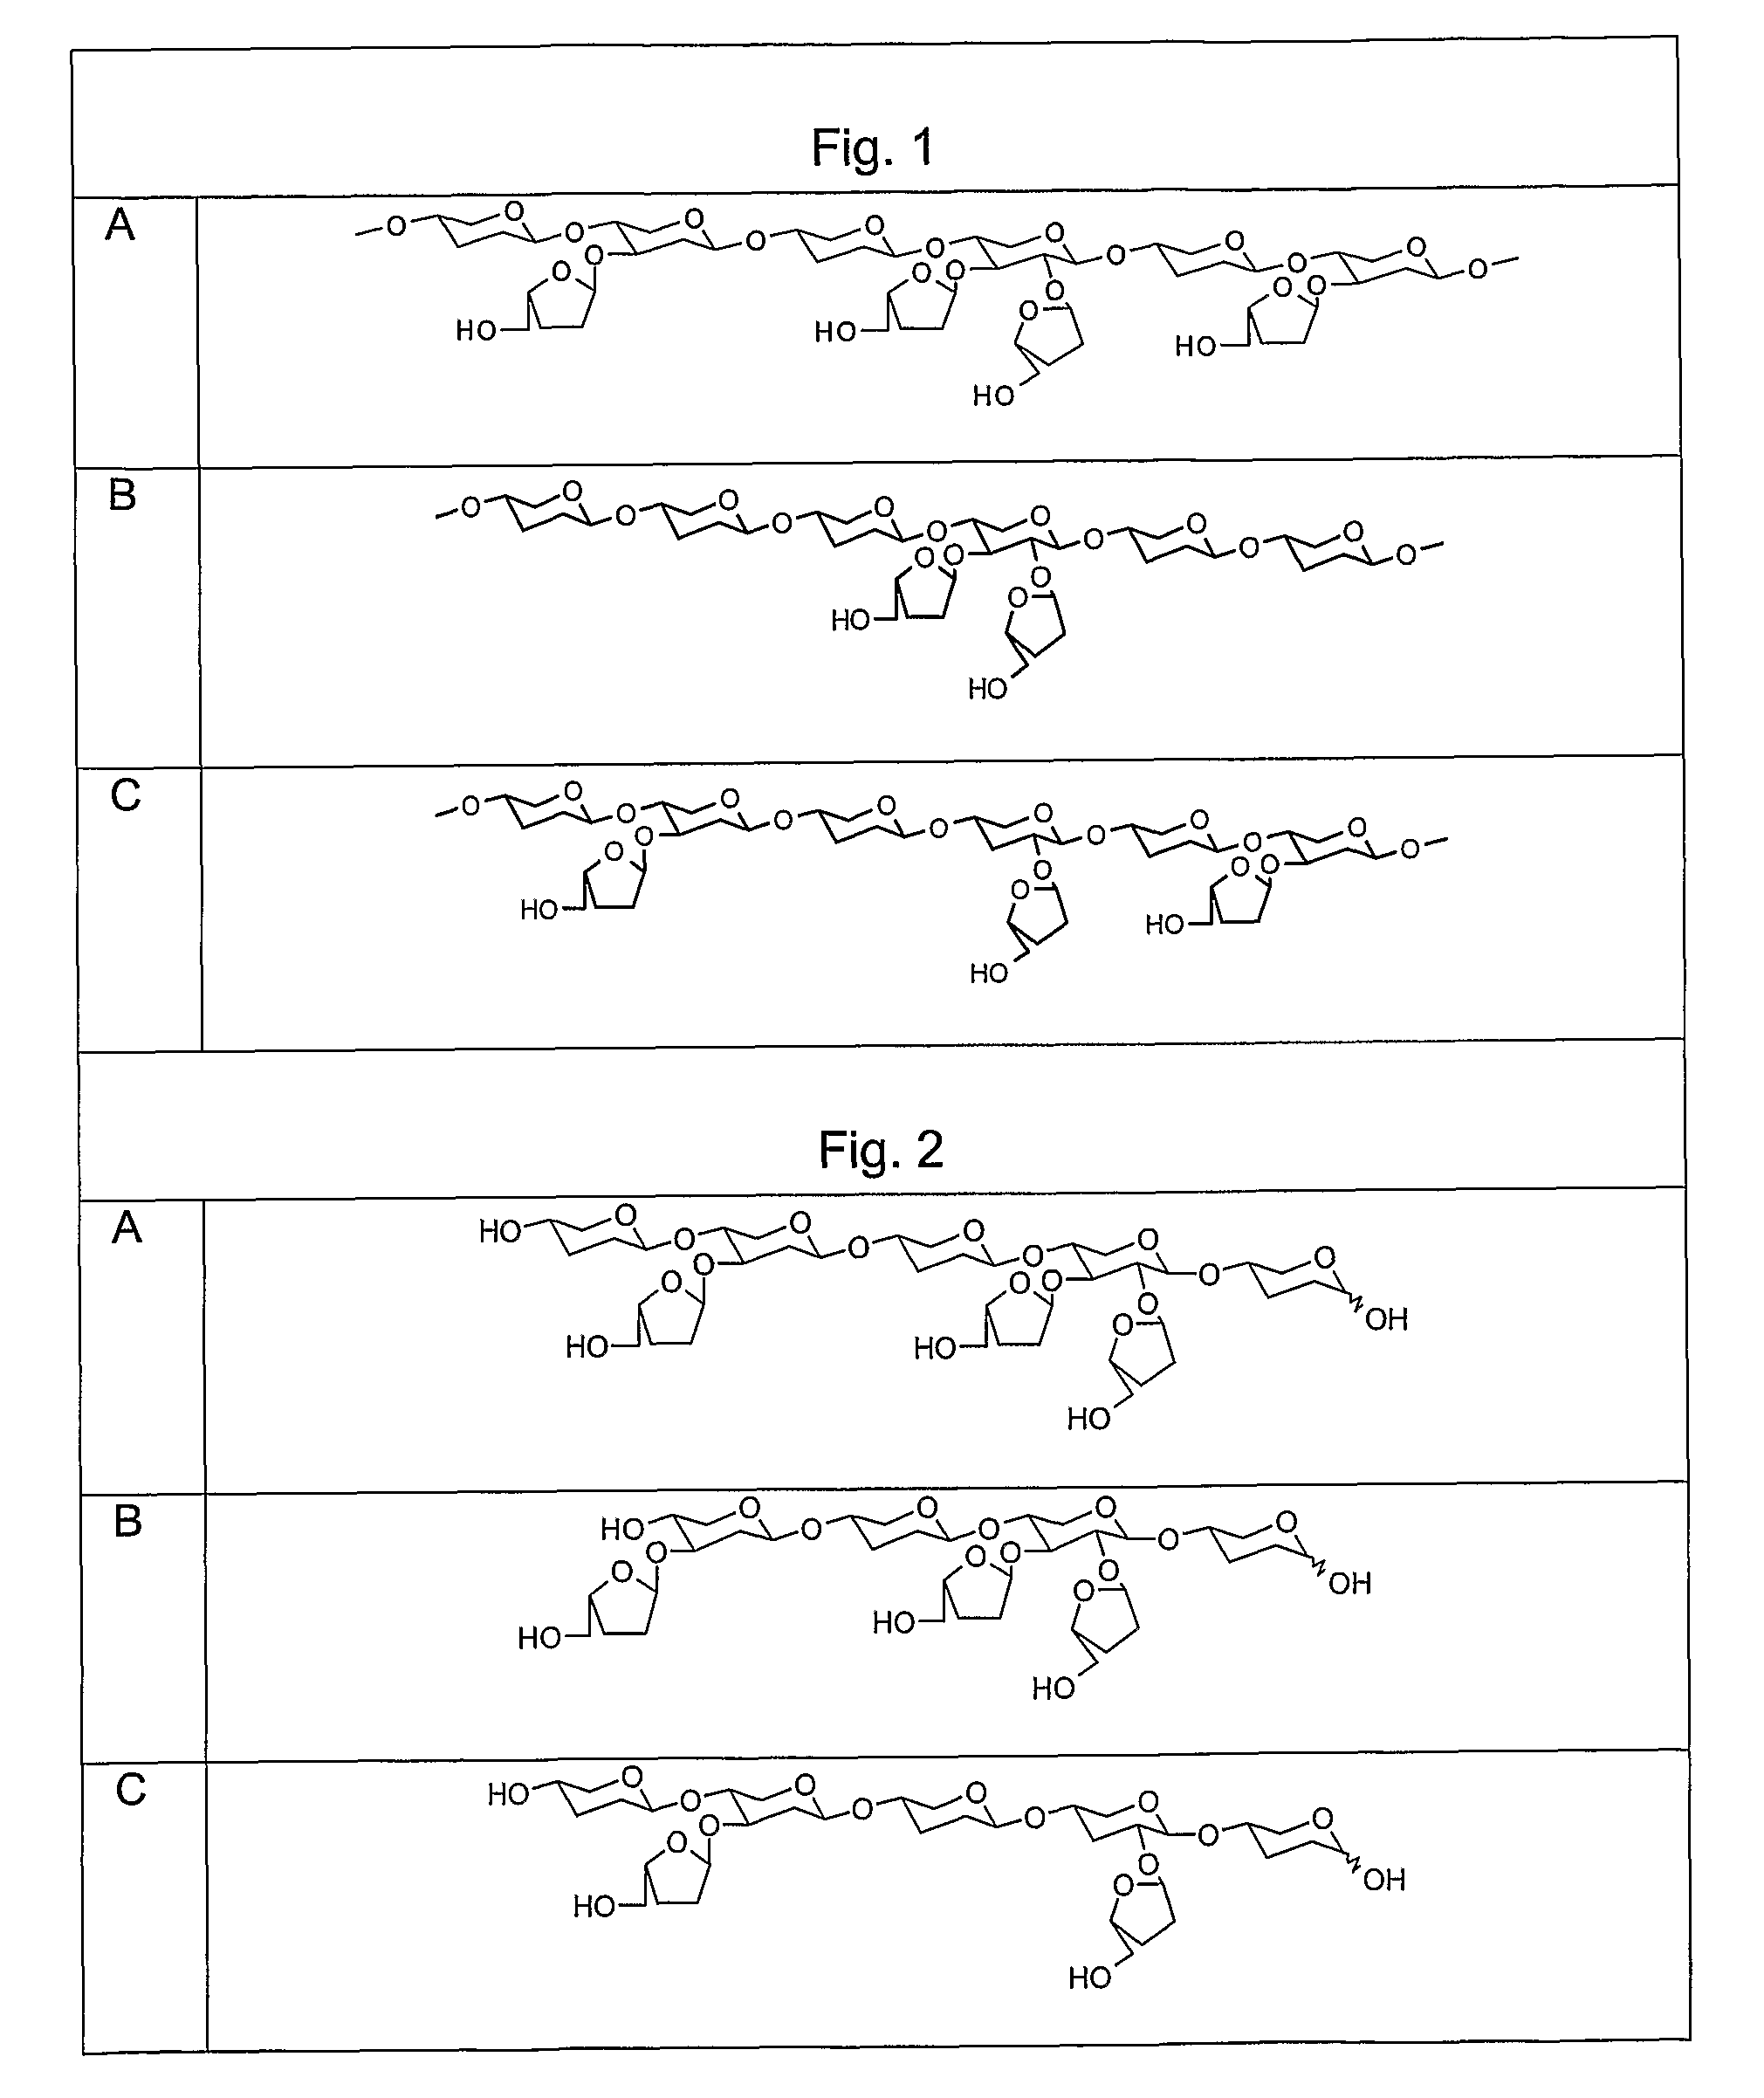 Hydrolysis of arabinoxylan